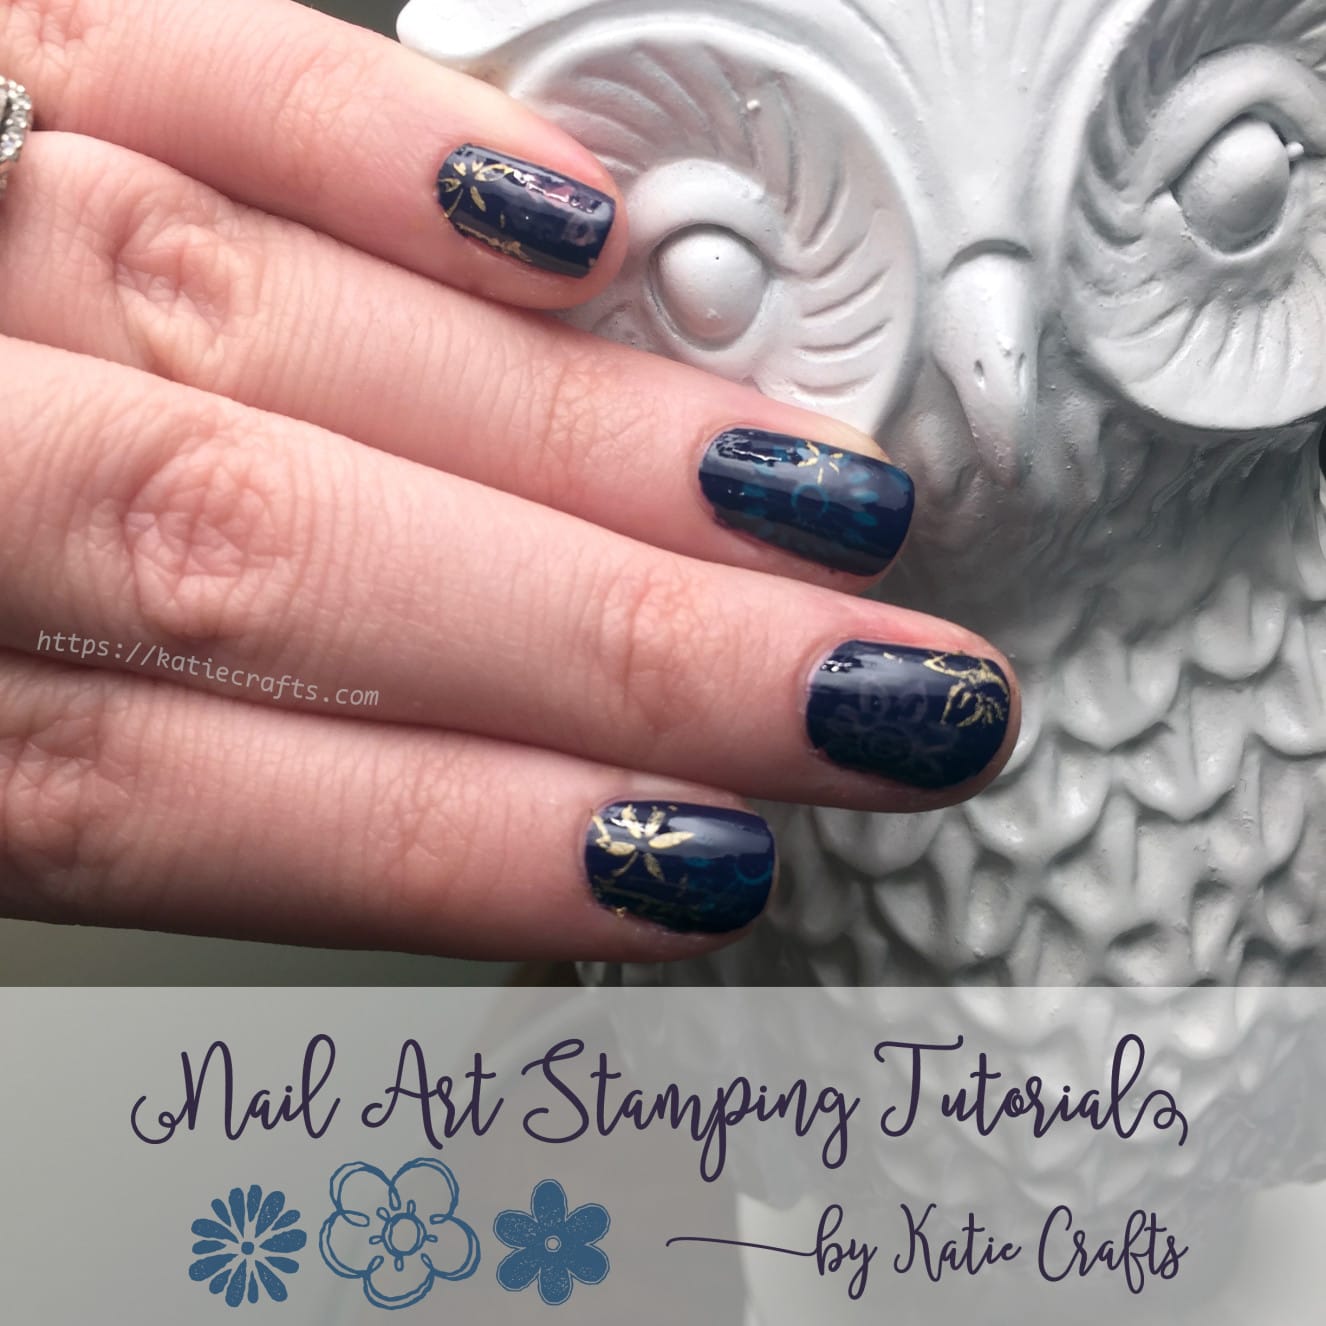 Nail Art Stamping on Katie Crafts; https://www.katiecrafts.com